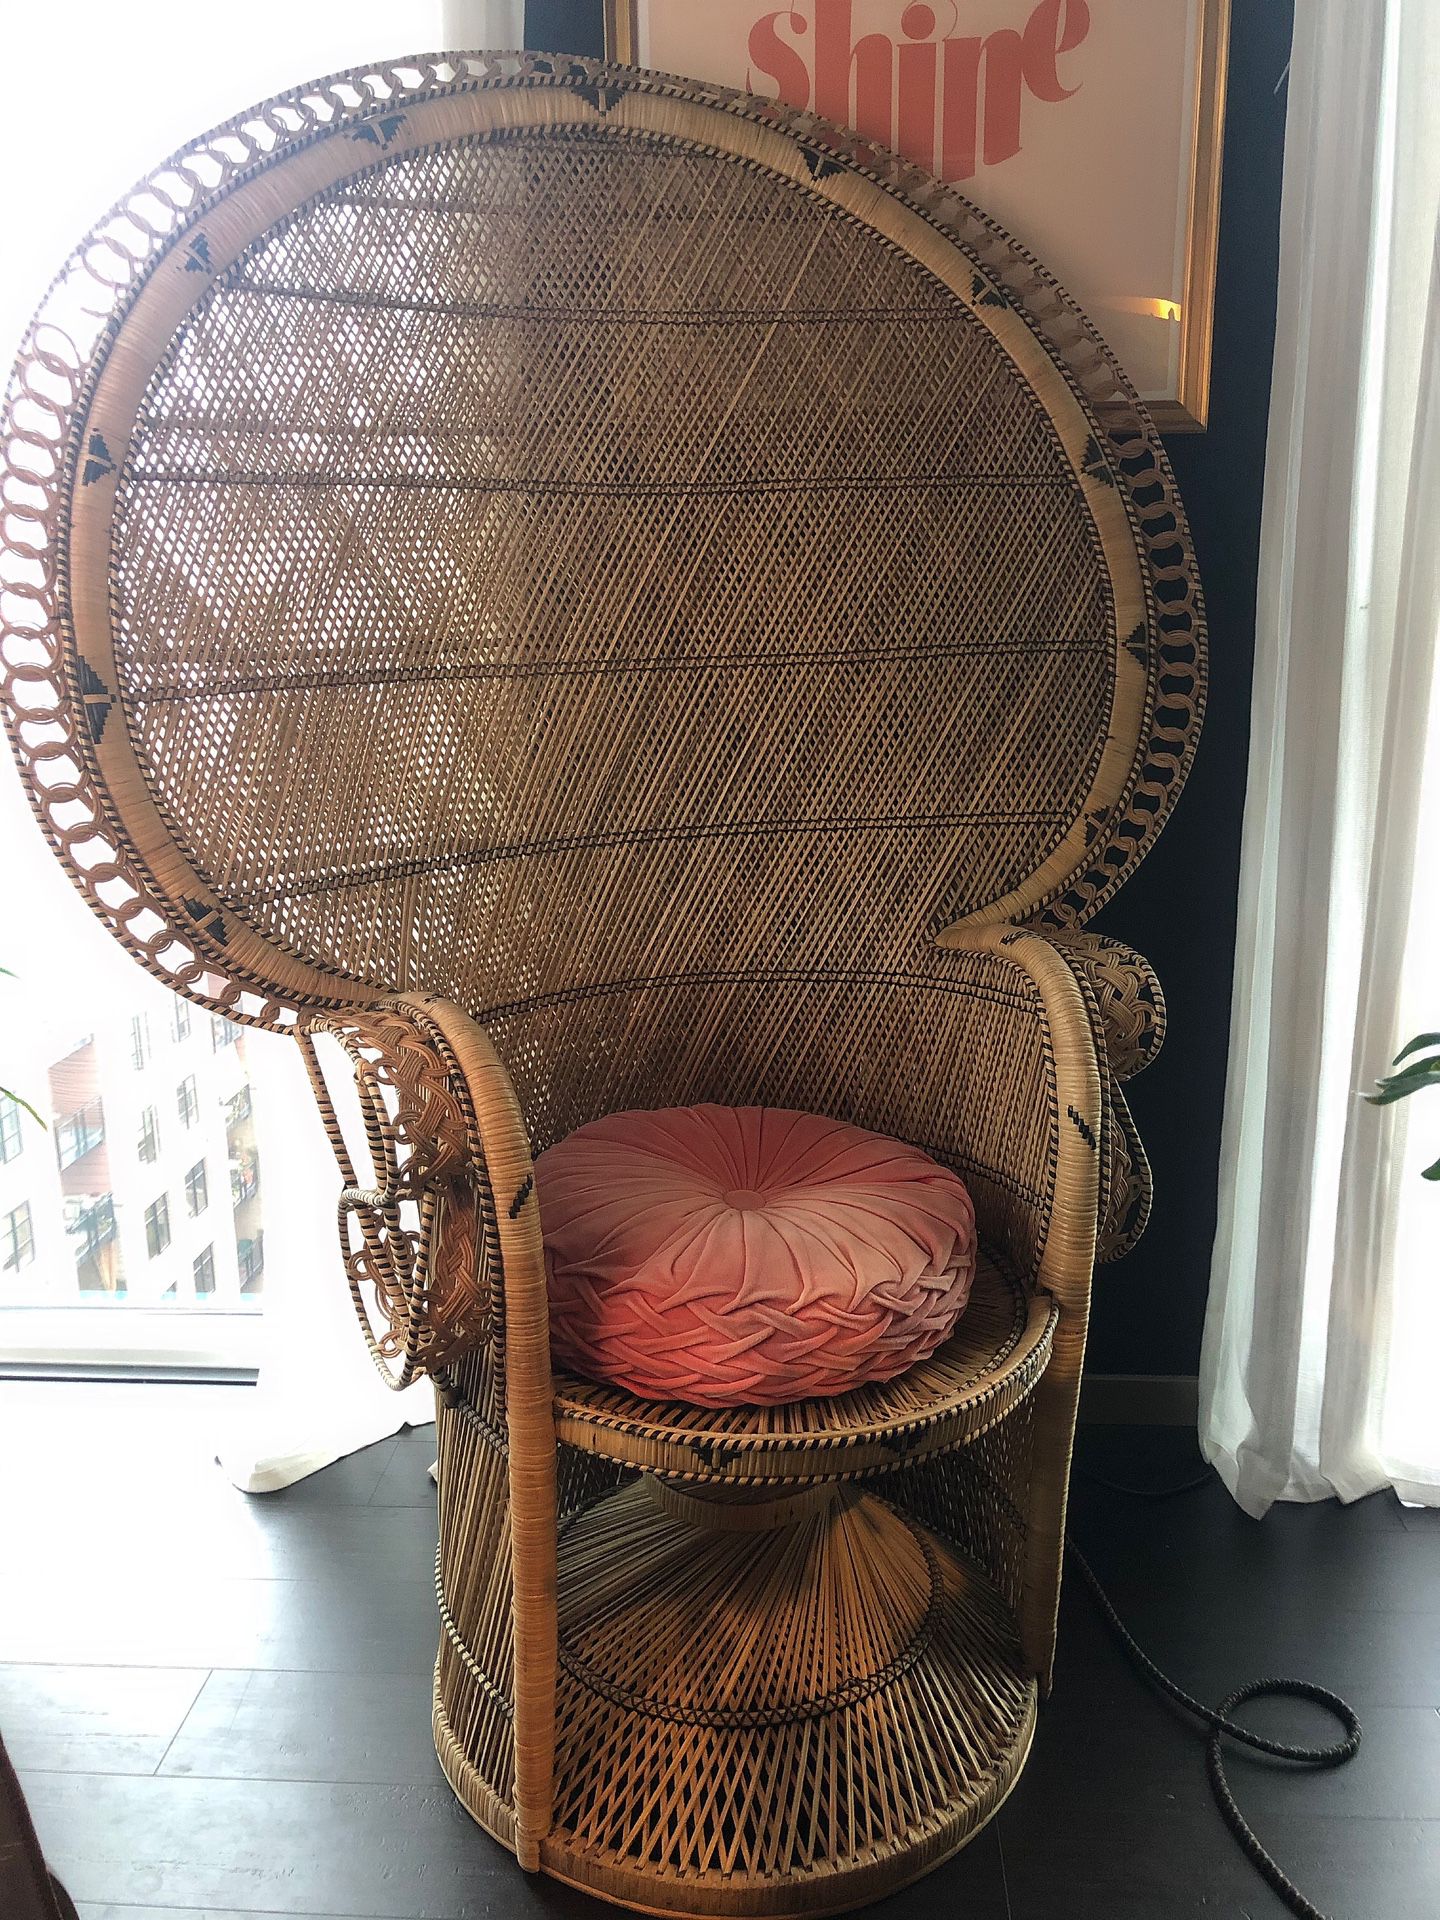 Vintage Rattan Peacock Chair